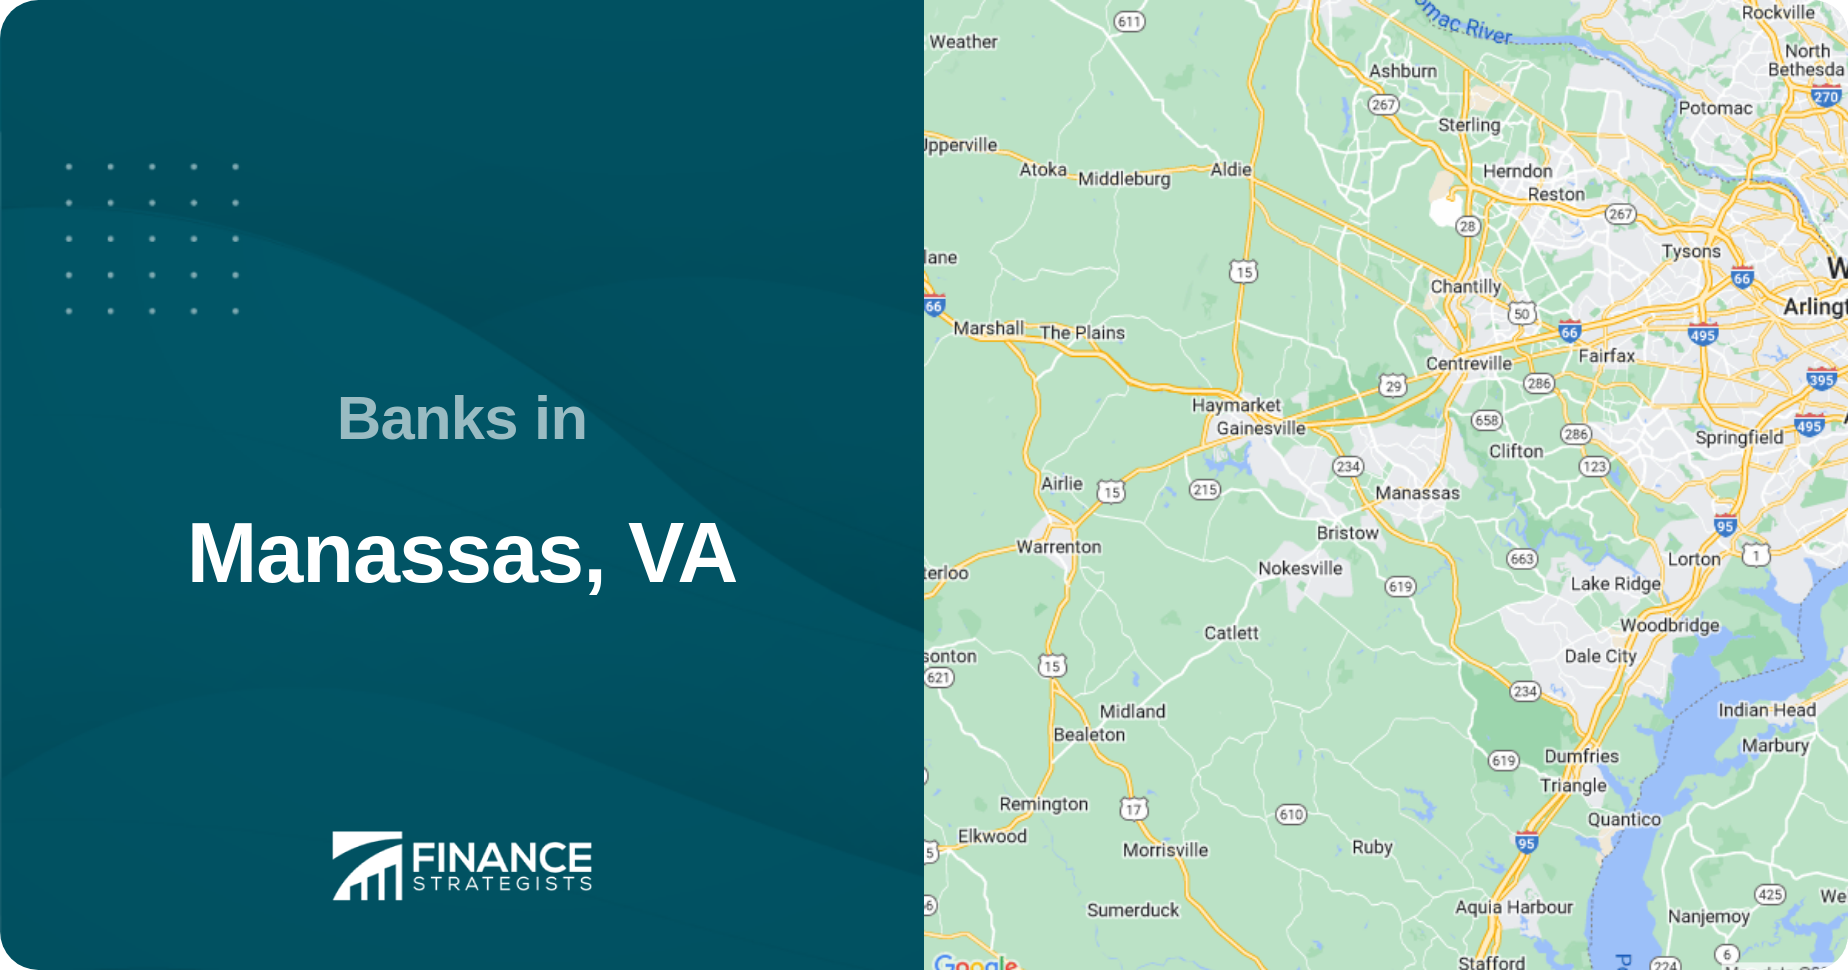 Banks in Manassas, VA